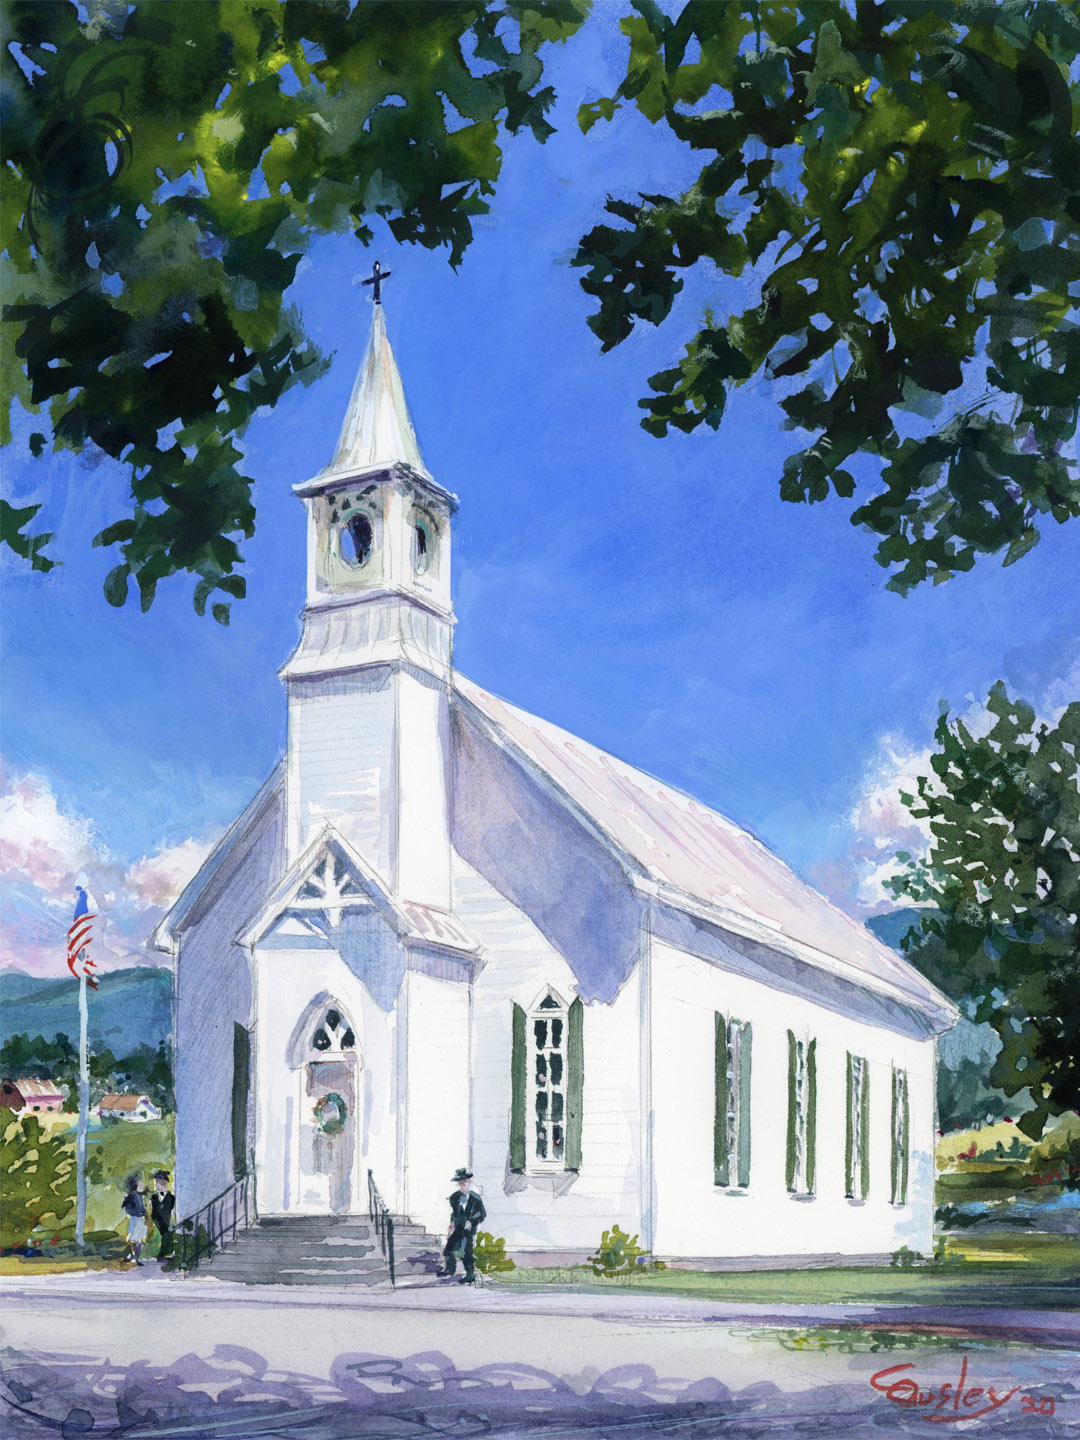 Well-Springs United Methodist Church